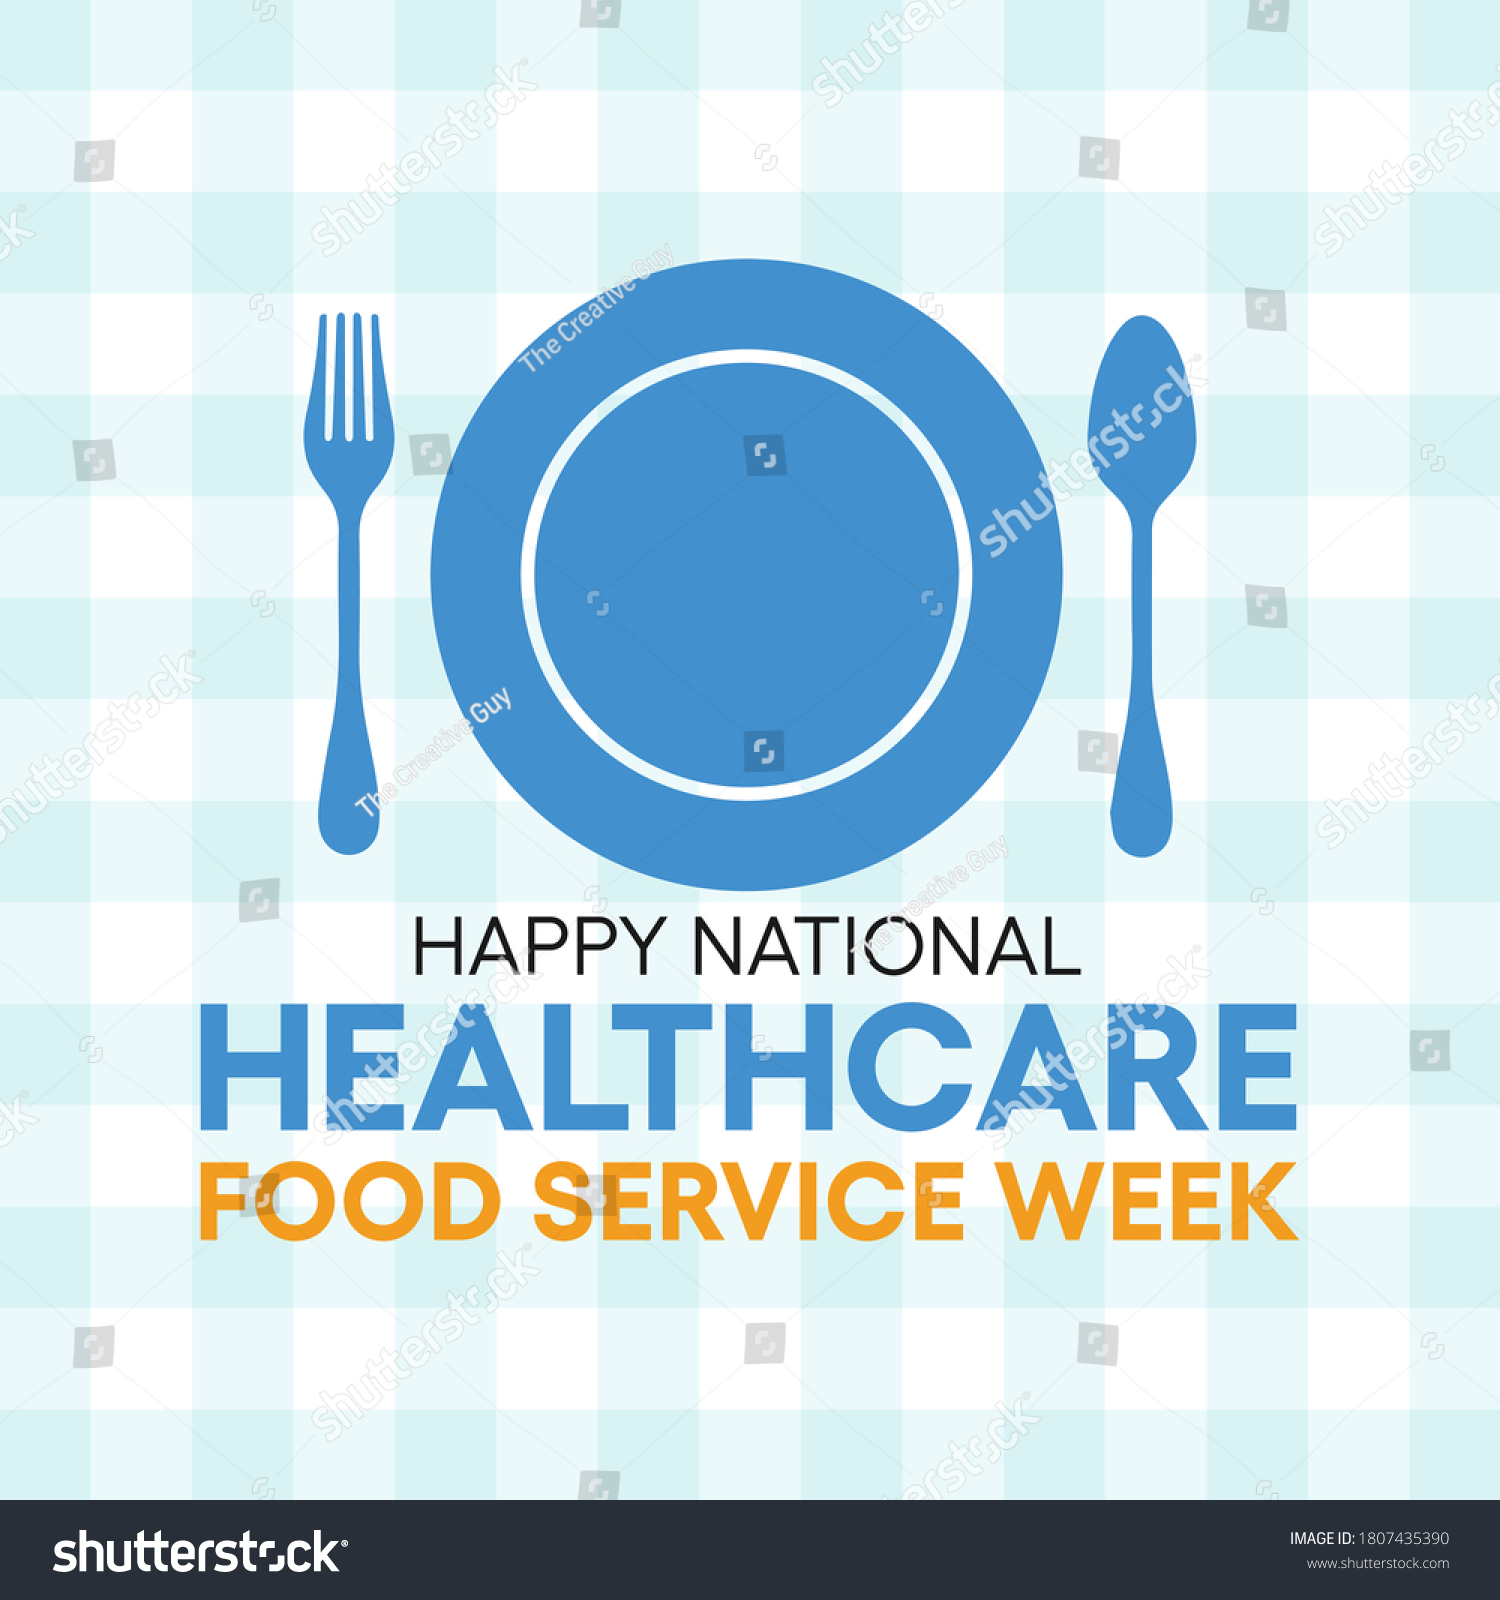 5,040 Healthcare food service Images, Stock Photos & Vectors Shutterstock